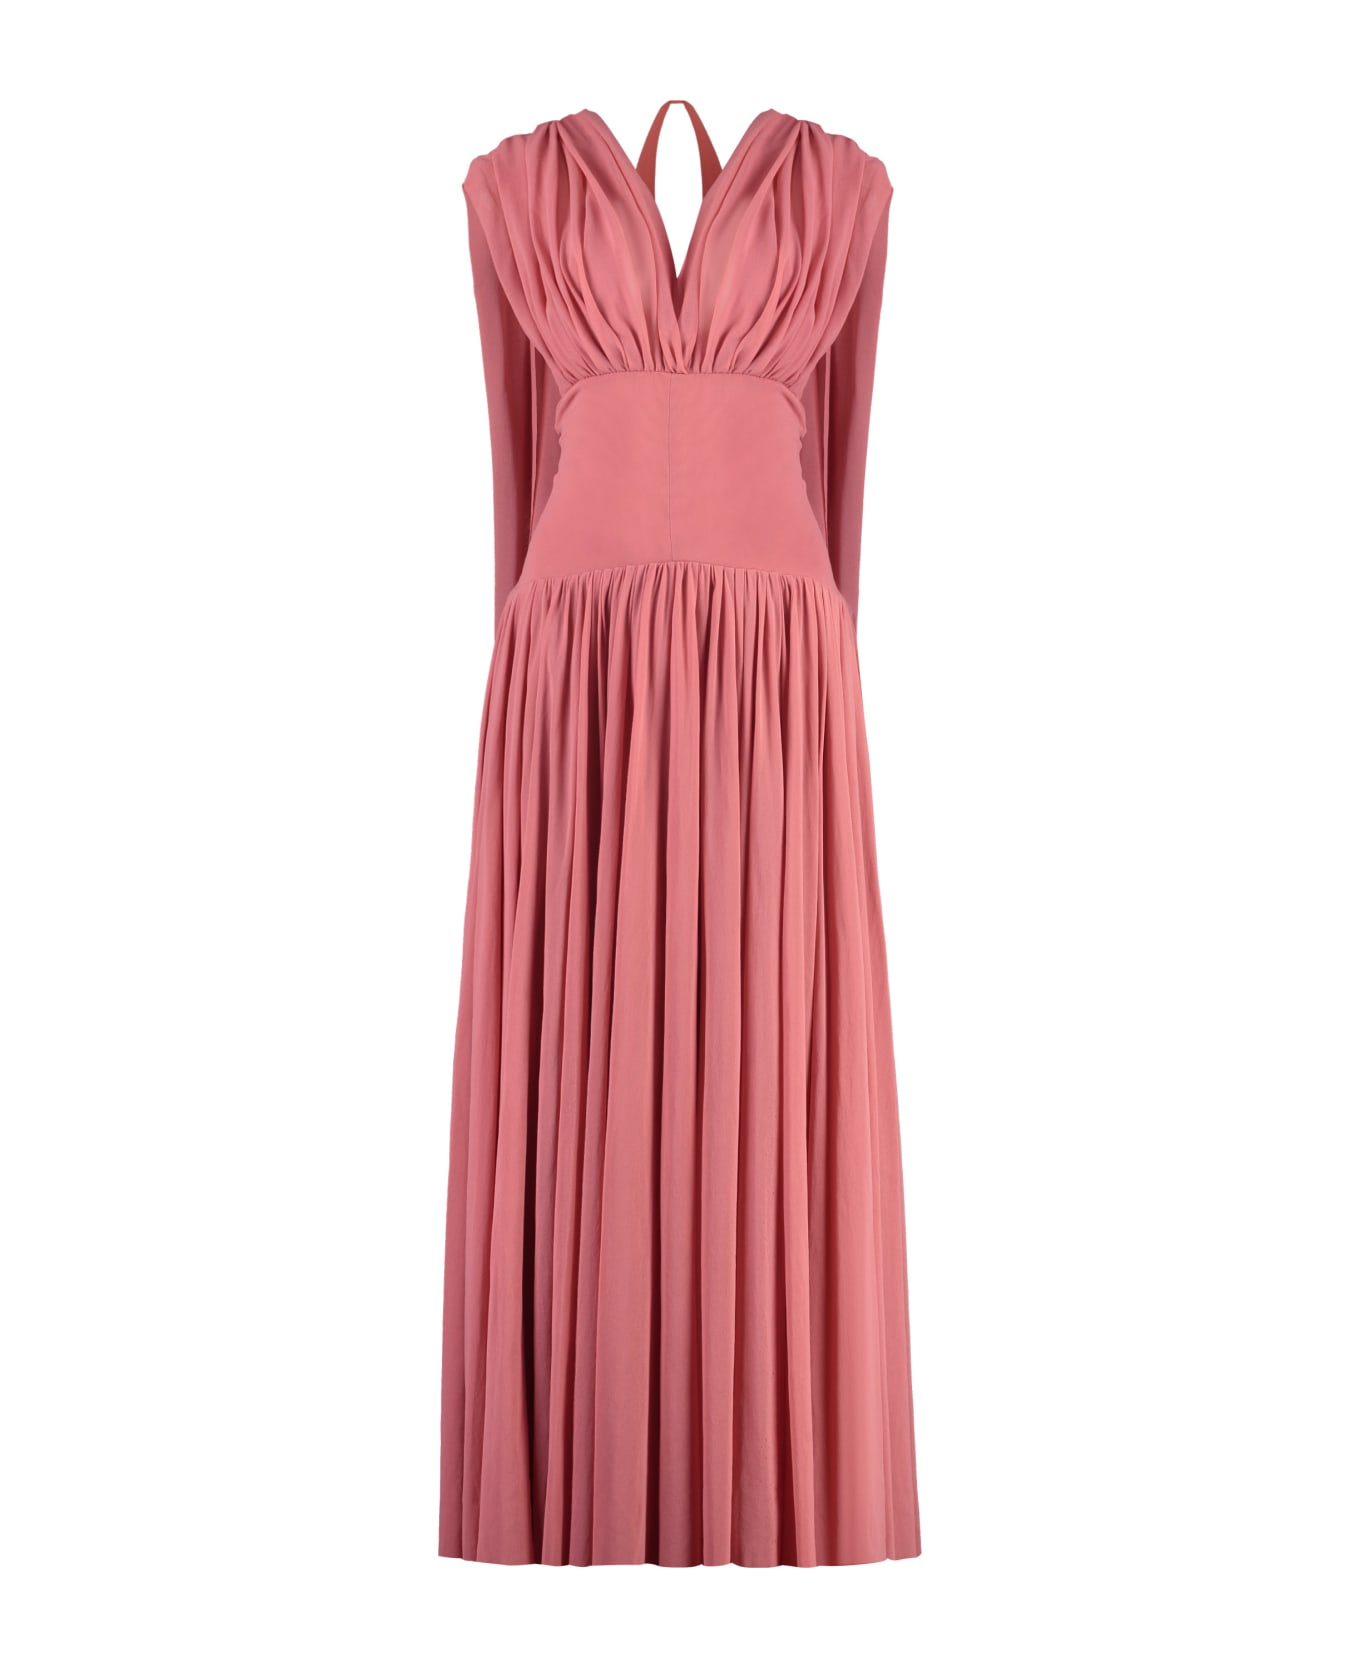 Philosophy di Lorenzo Serafini Tulle Dress - Pink